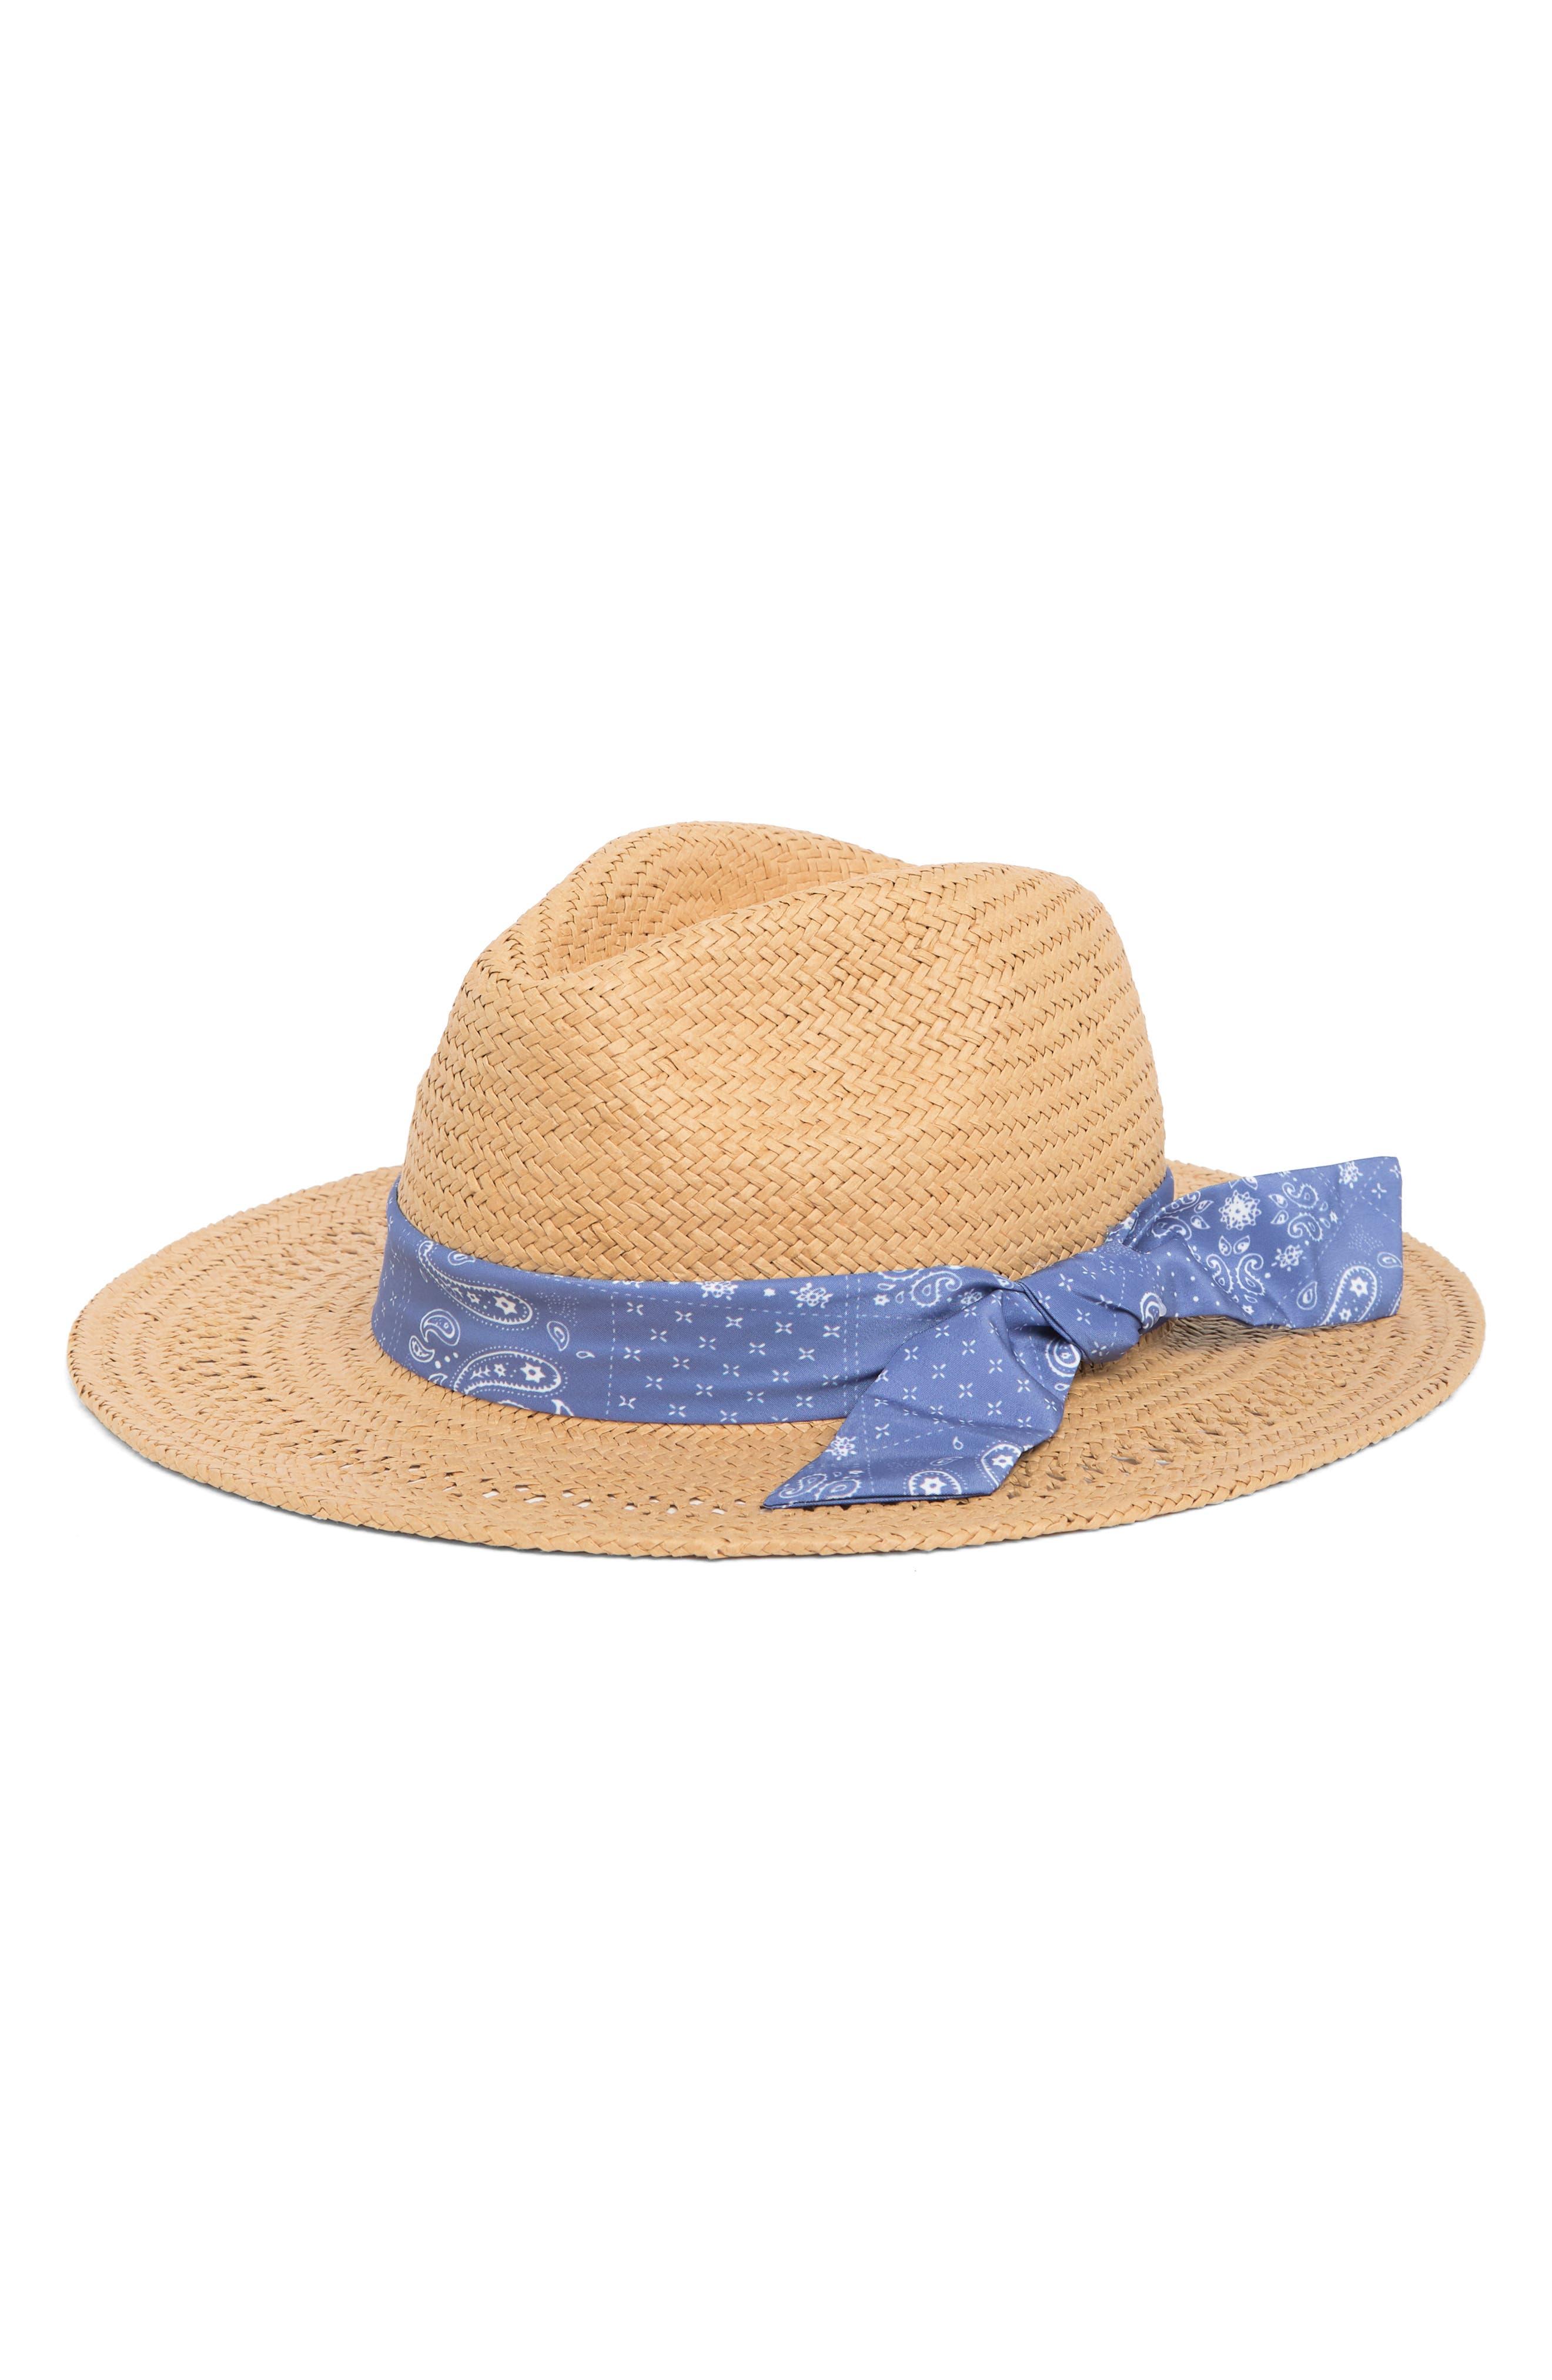 Steve Madden Lee Woven Straw Panama Hat in Blue | Lyst